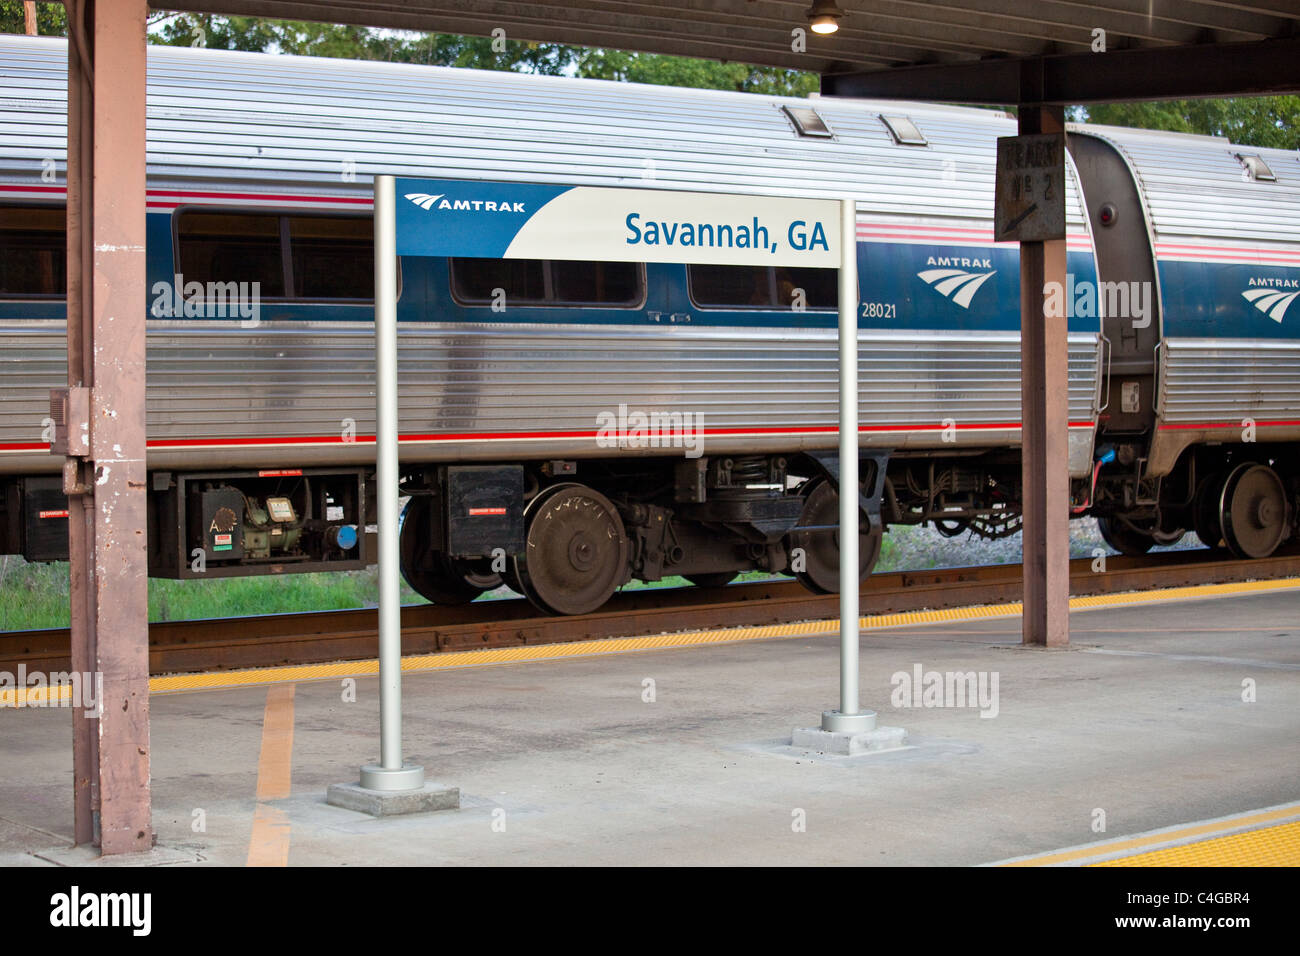 Amtrak Railway Station in Savannah, Georgia Stock Photo - Alamy